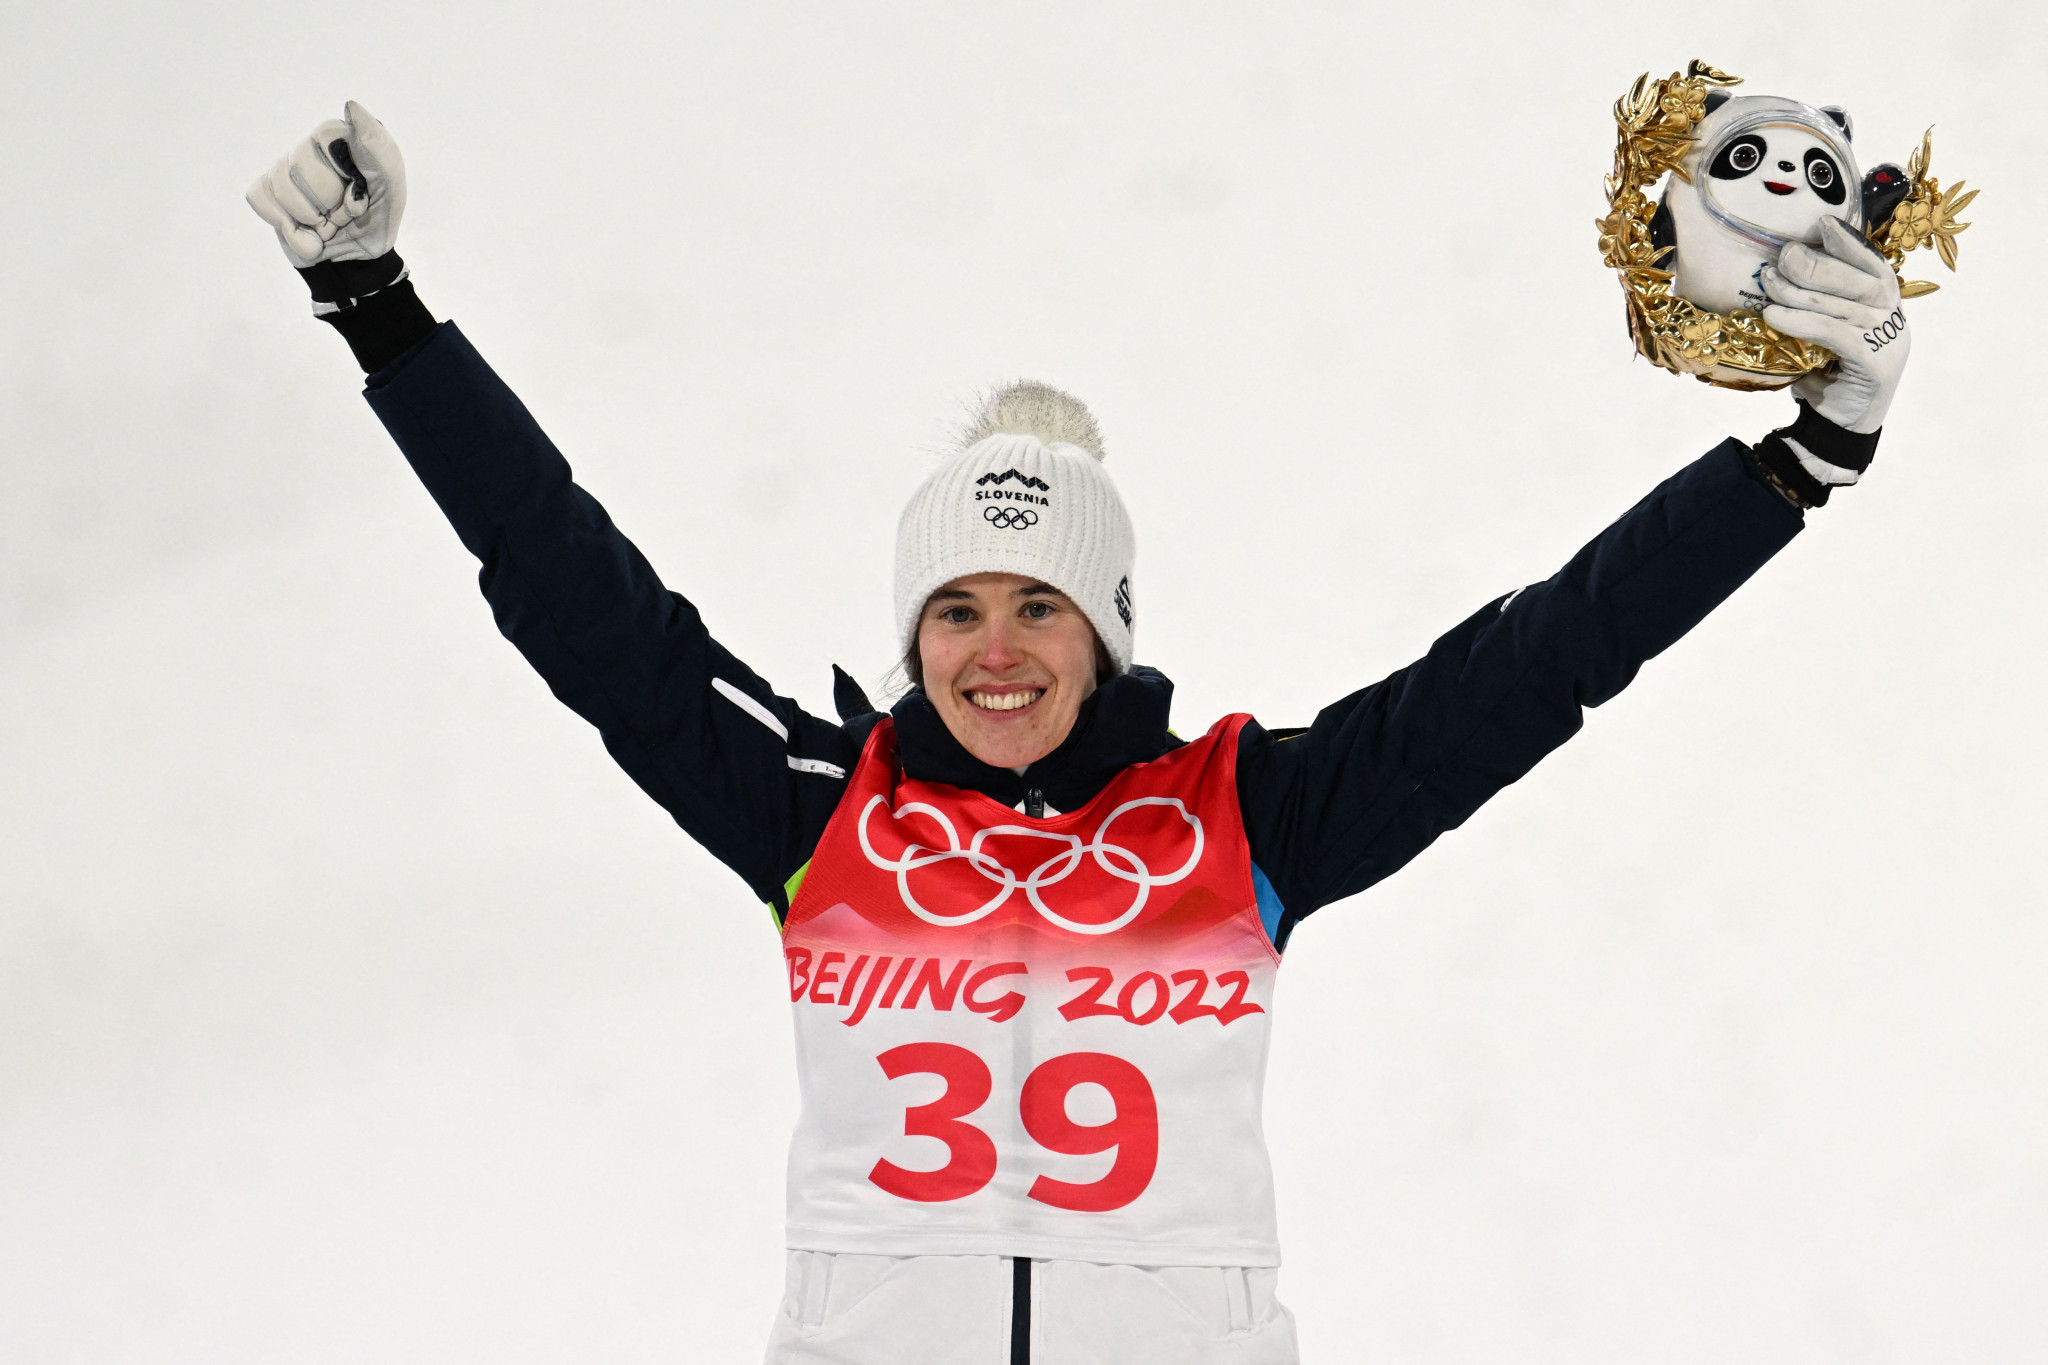 Bogataj clinches women's ski jumping gold at Beijing 2022 Winter Olympics